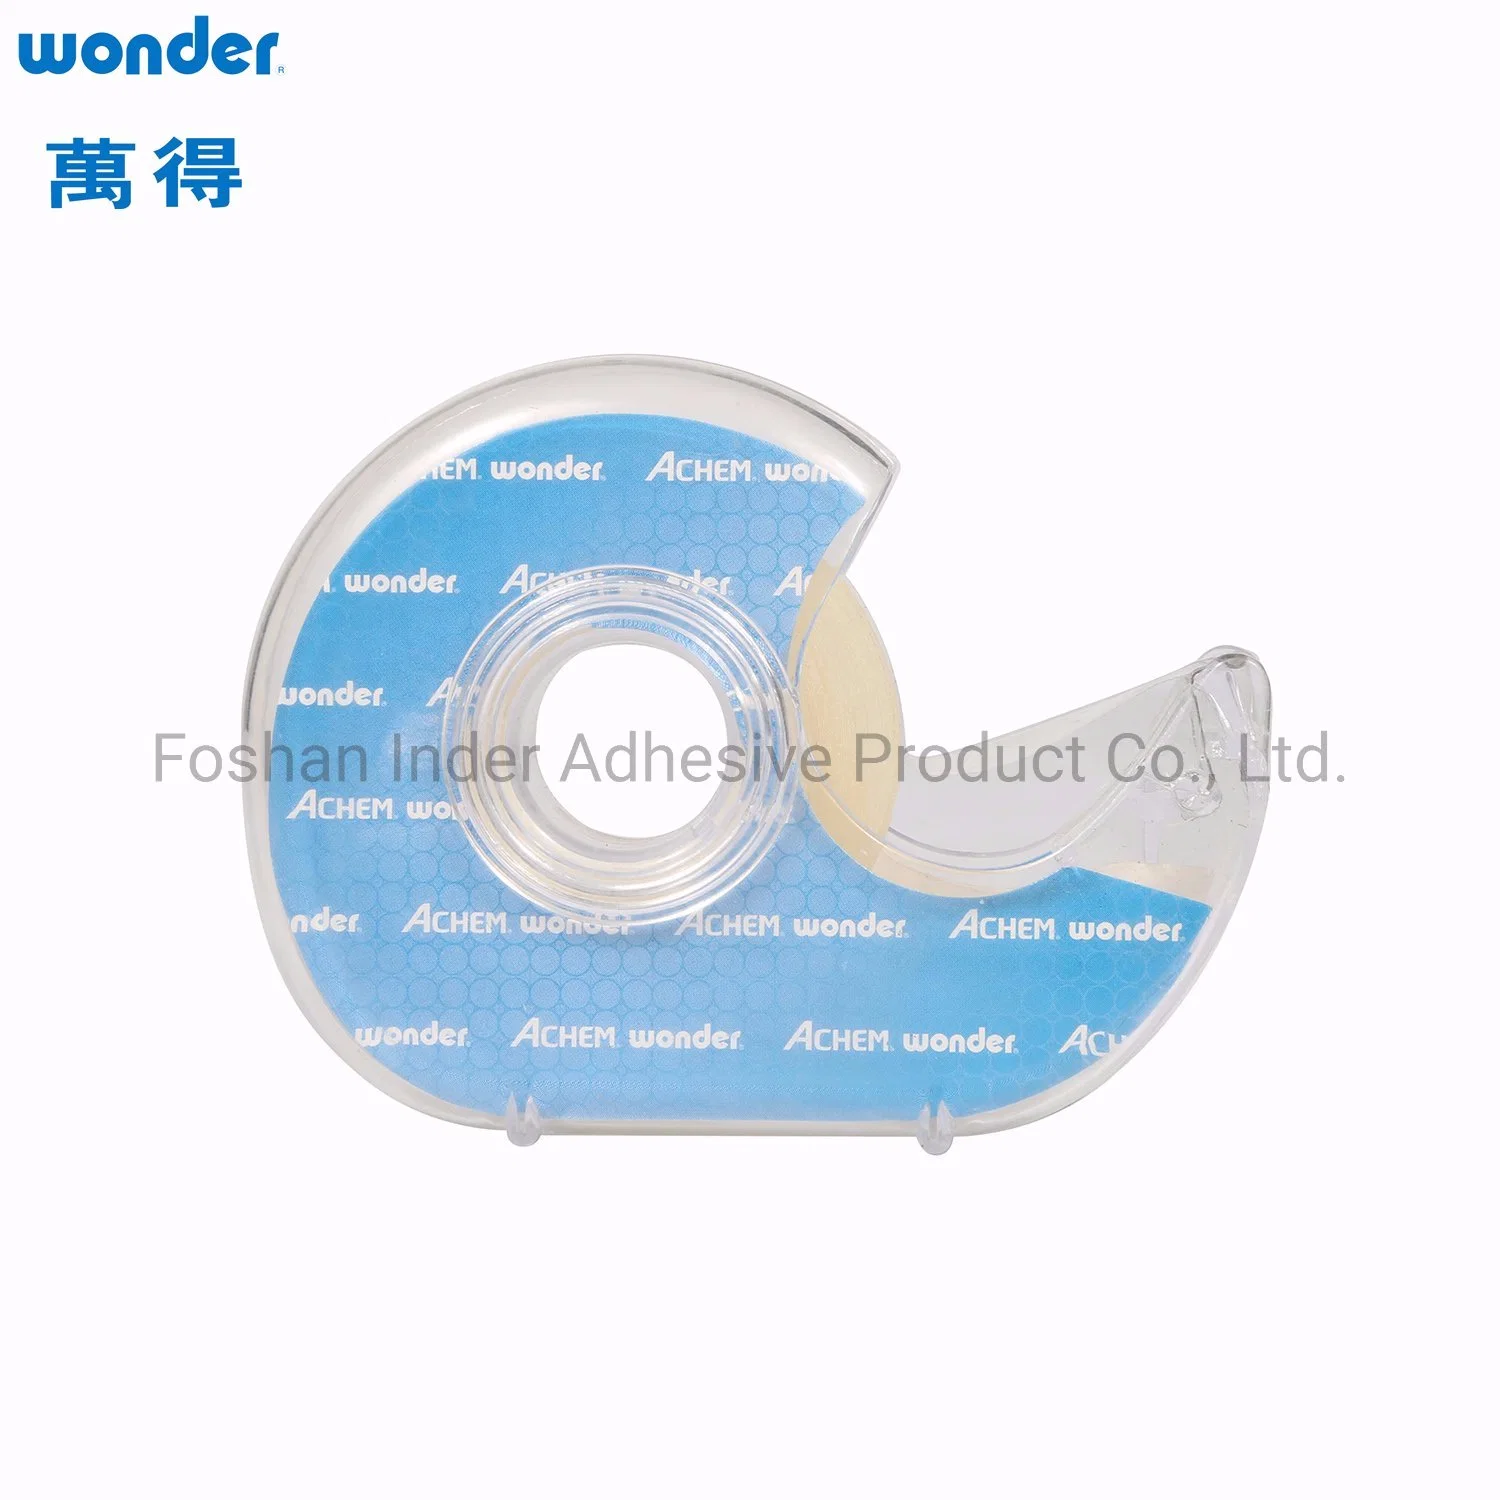 Wonder Brand BOPP Stationery Tape Dispenser / Tape Cutter for School and Office